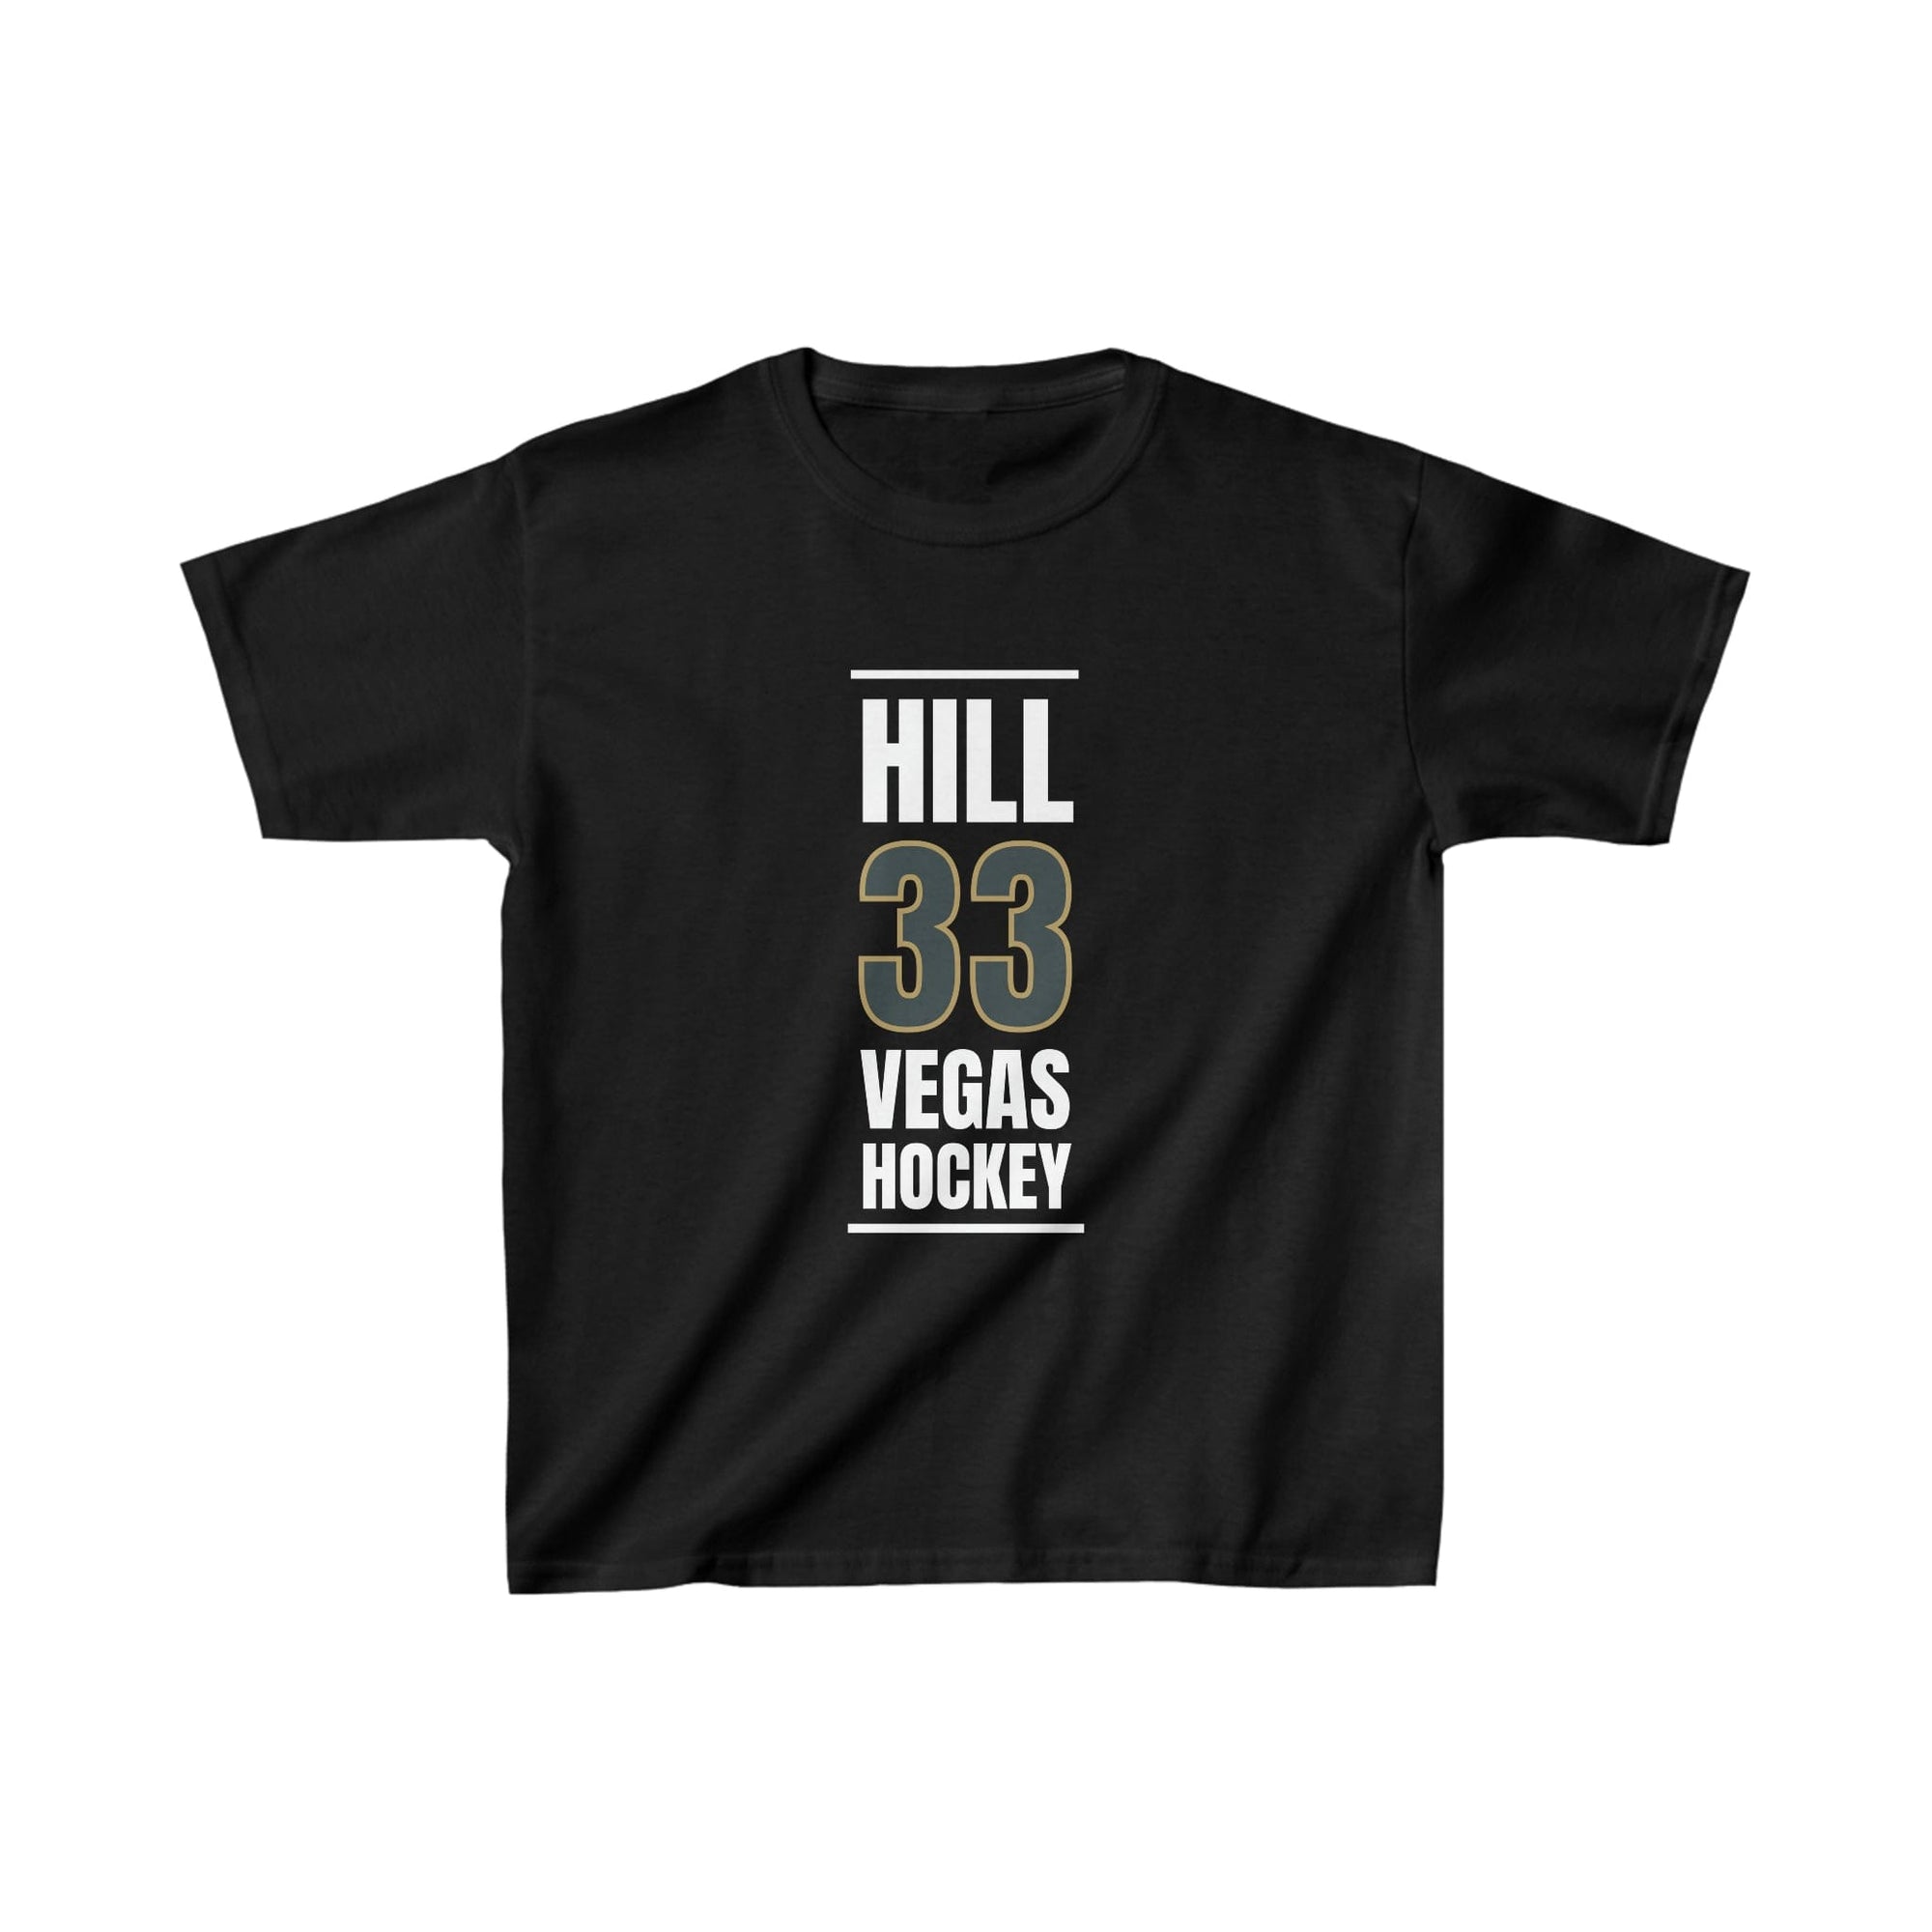 Kids clothes Hill 33 Vegas Hockey Steel Gray Vertical Design Kids Tee